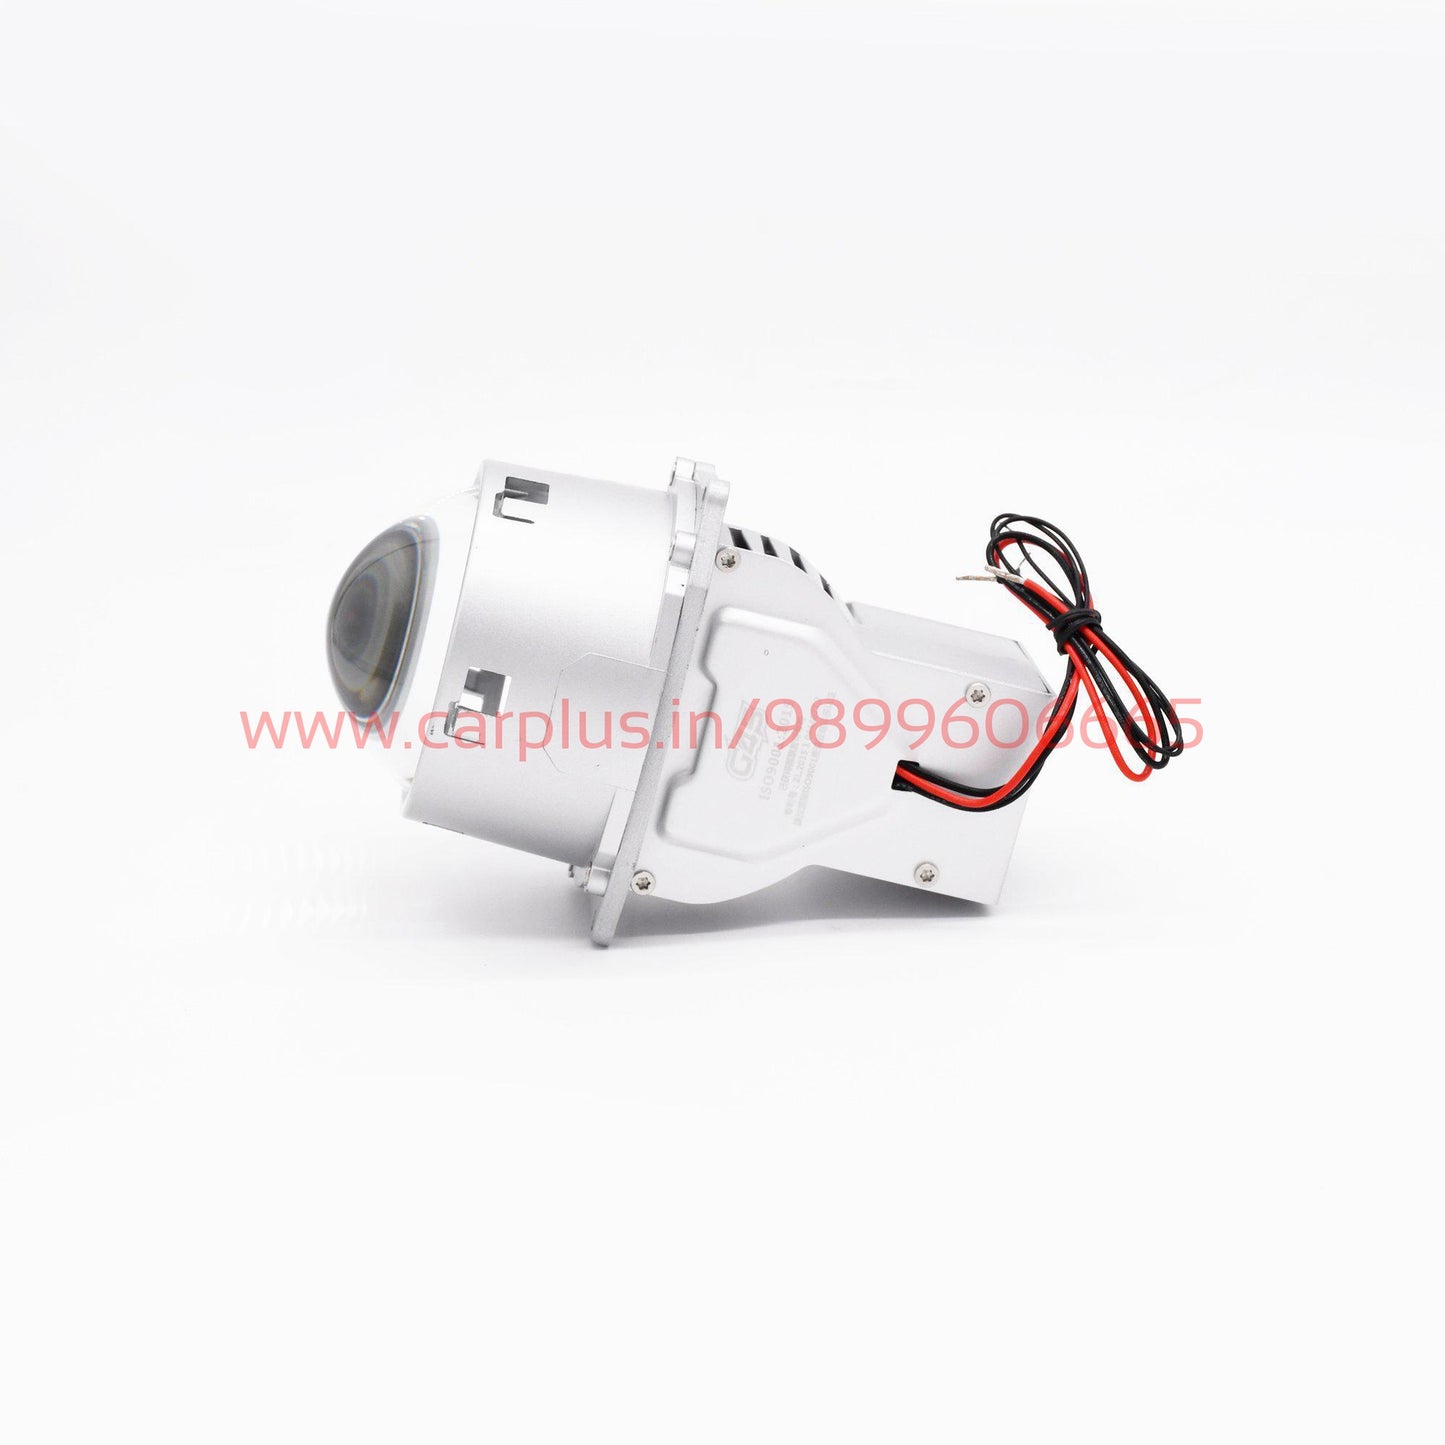 
                  
                    KMH GTR G35 (4680) LED & Laser Headlight Projector Lens - 65W 5800K-LED HEAD LAMP-KMH-LED-CARPLUS
                  
                